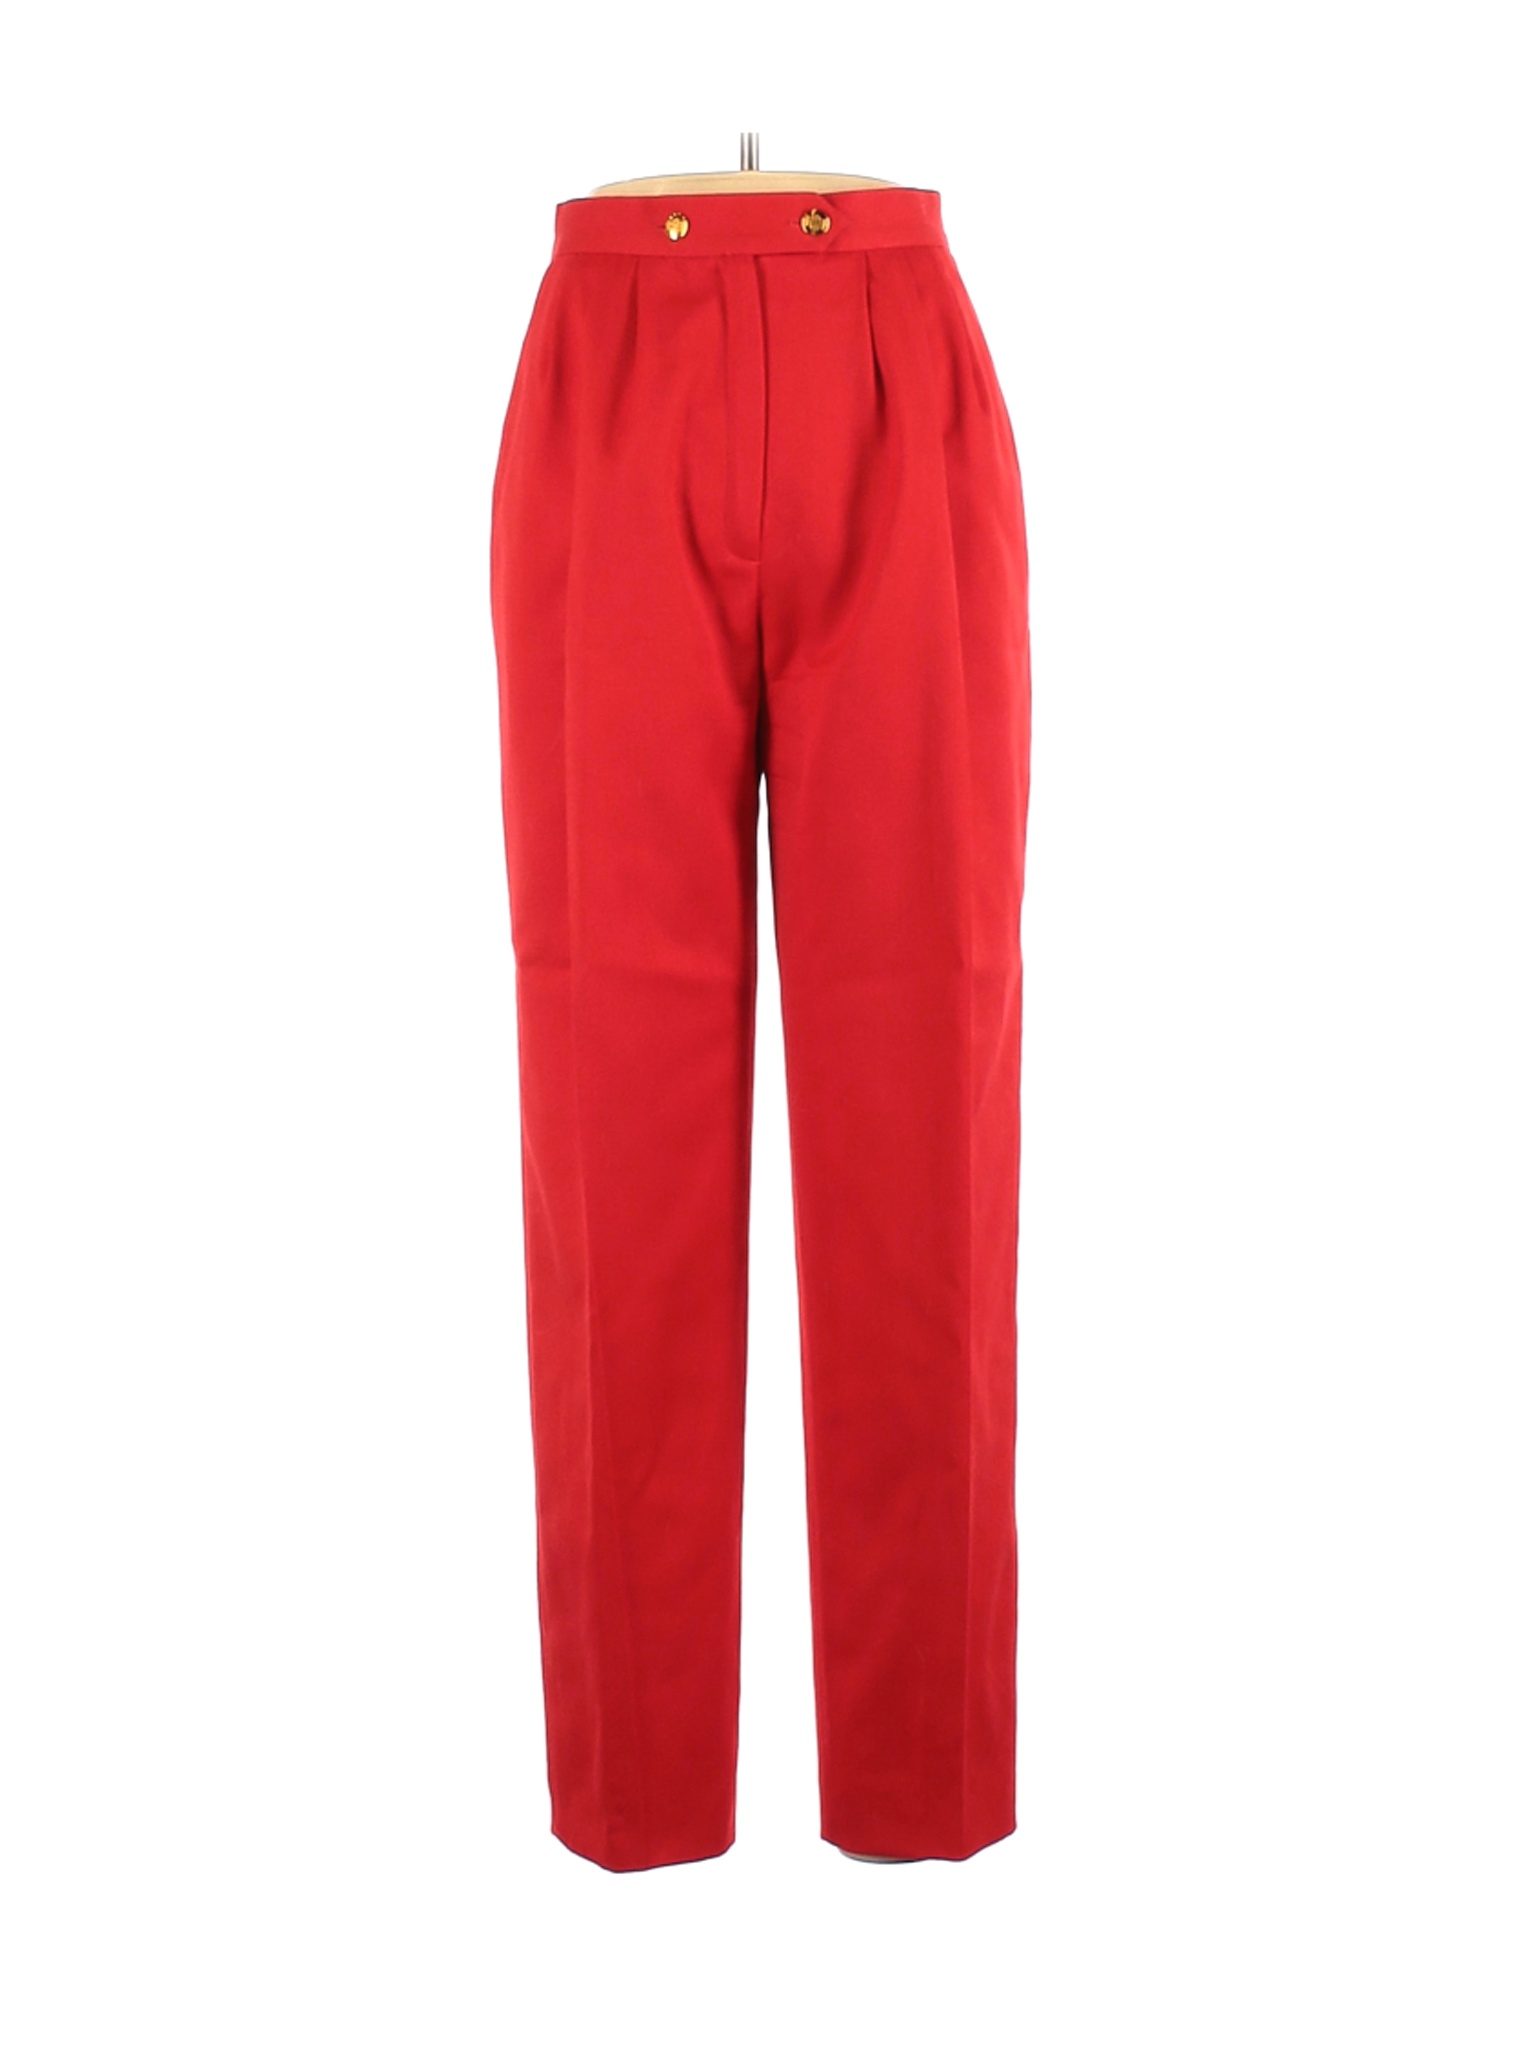 Assorted Brands Women Red Wool Pants 10 | eBay